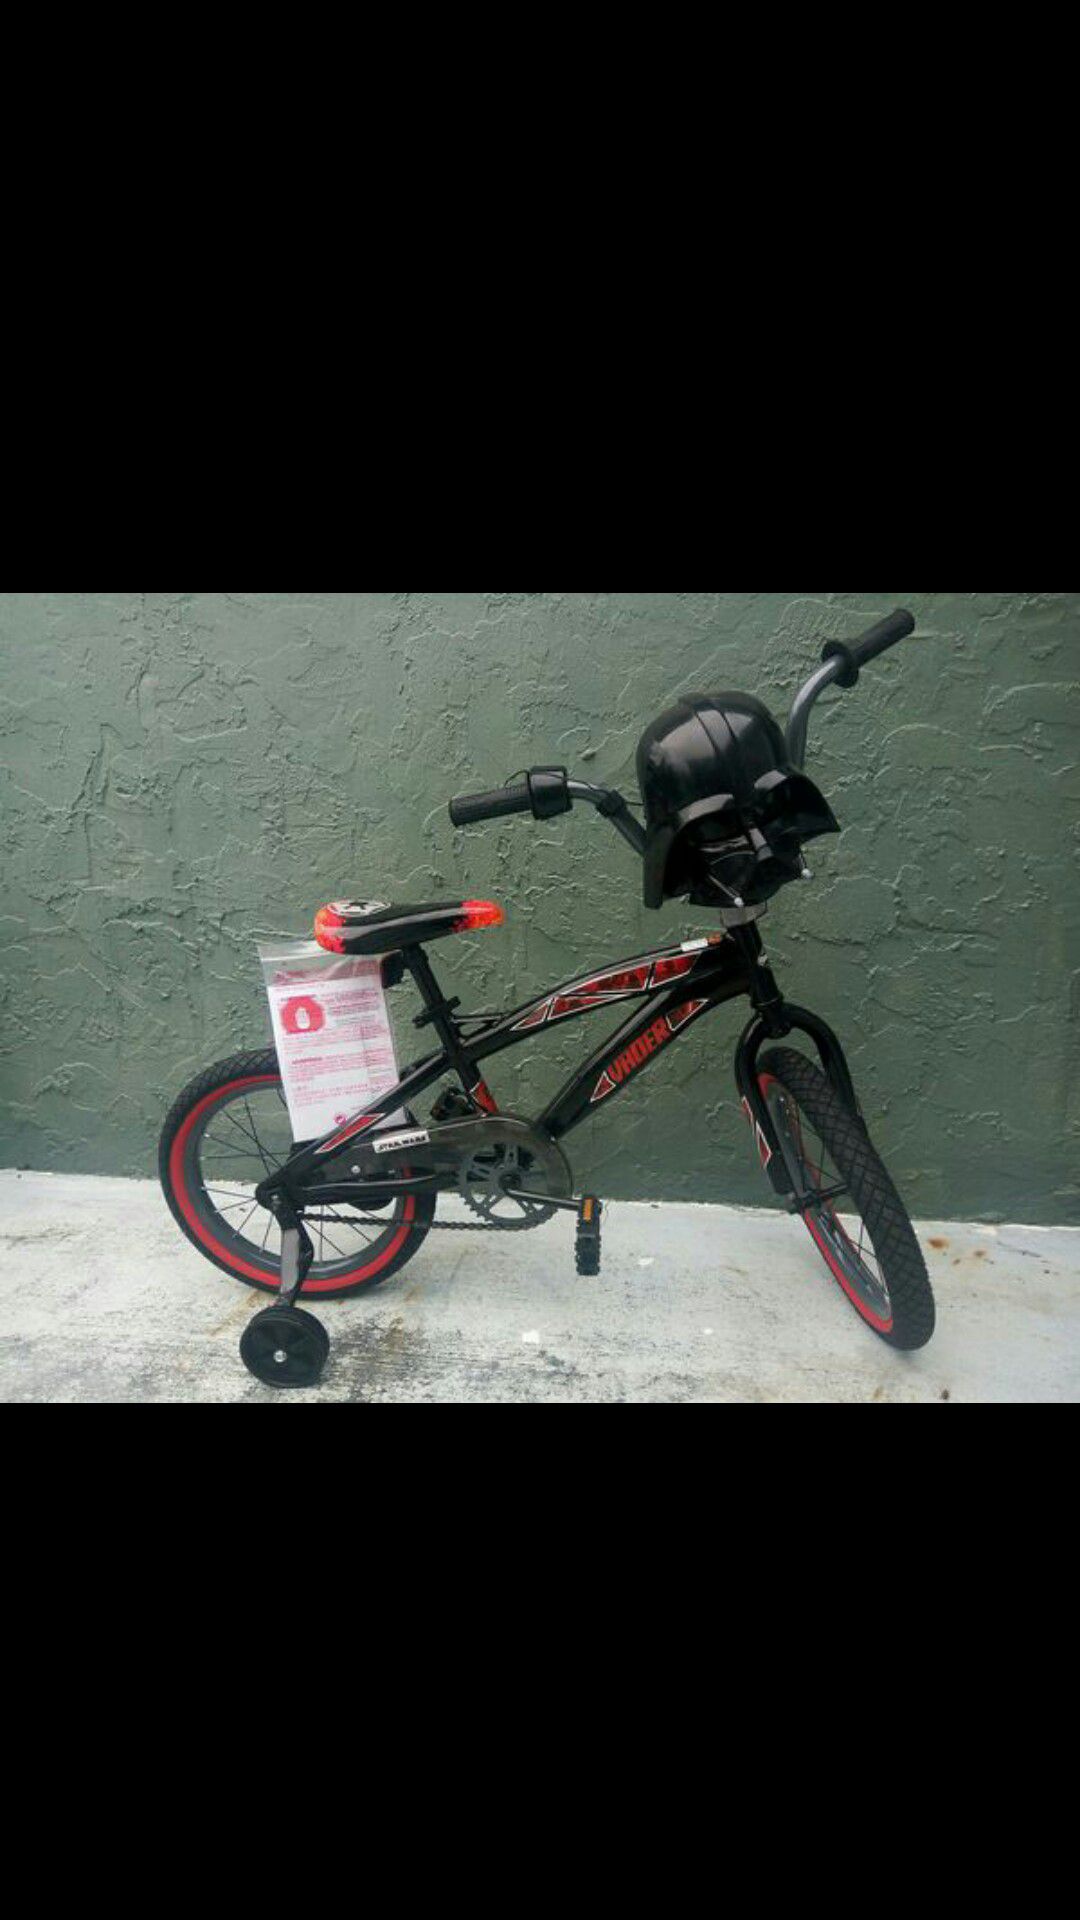 New 16" Star Wars Darth Vader bike